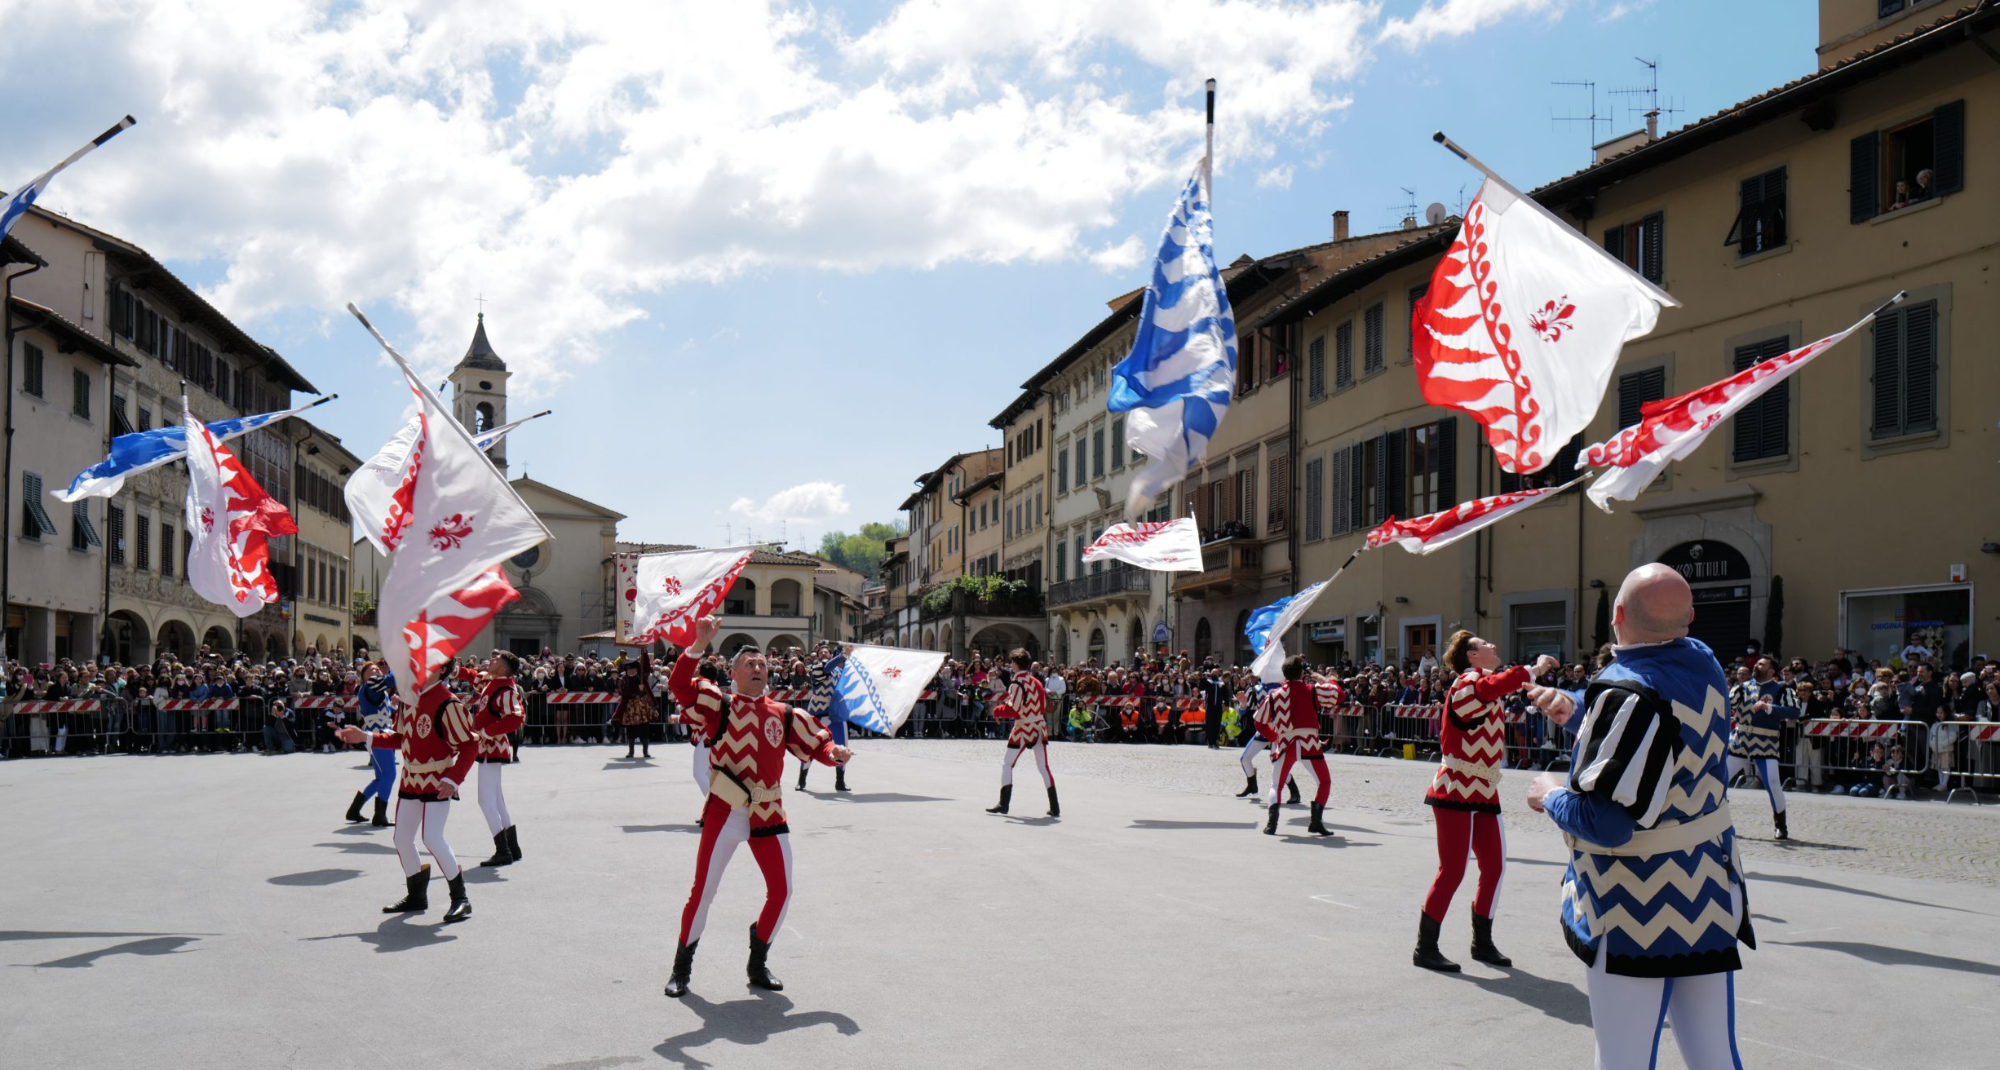 Photo des agitateurs de drapeaux du groupe Borghi e Sestieri Fiorentini